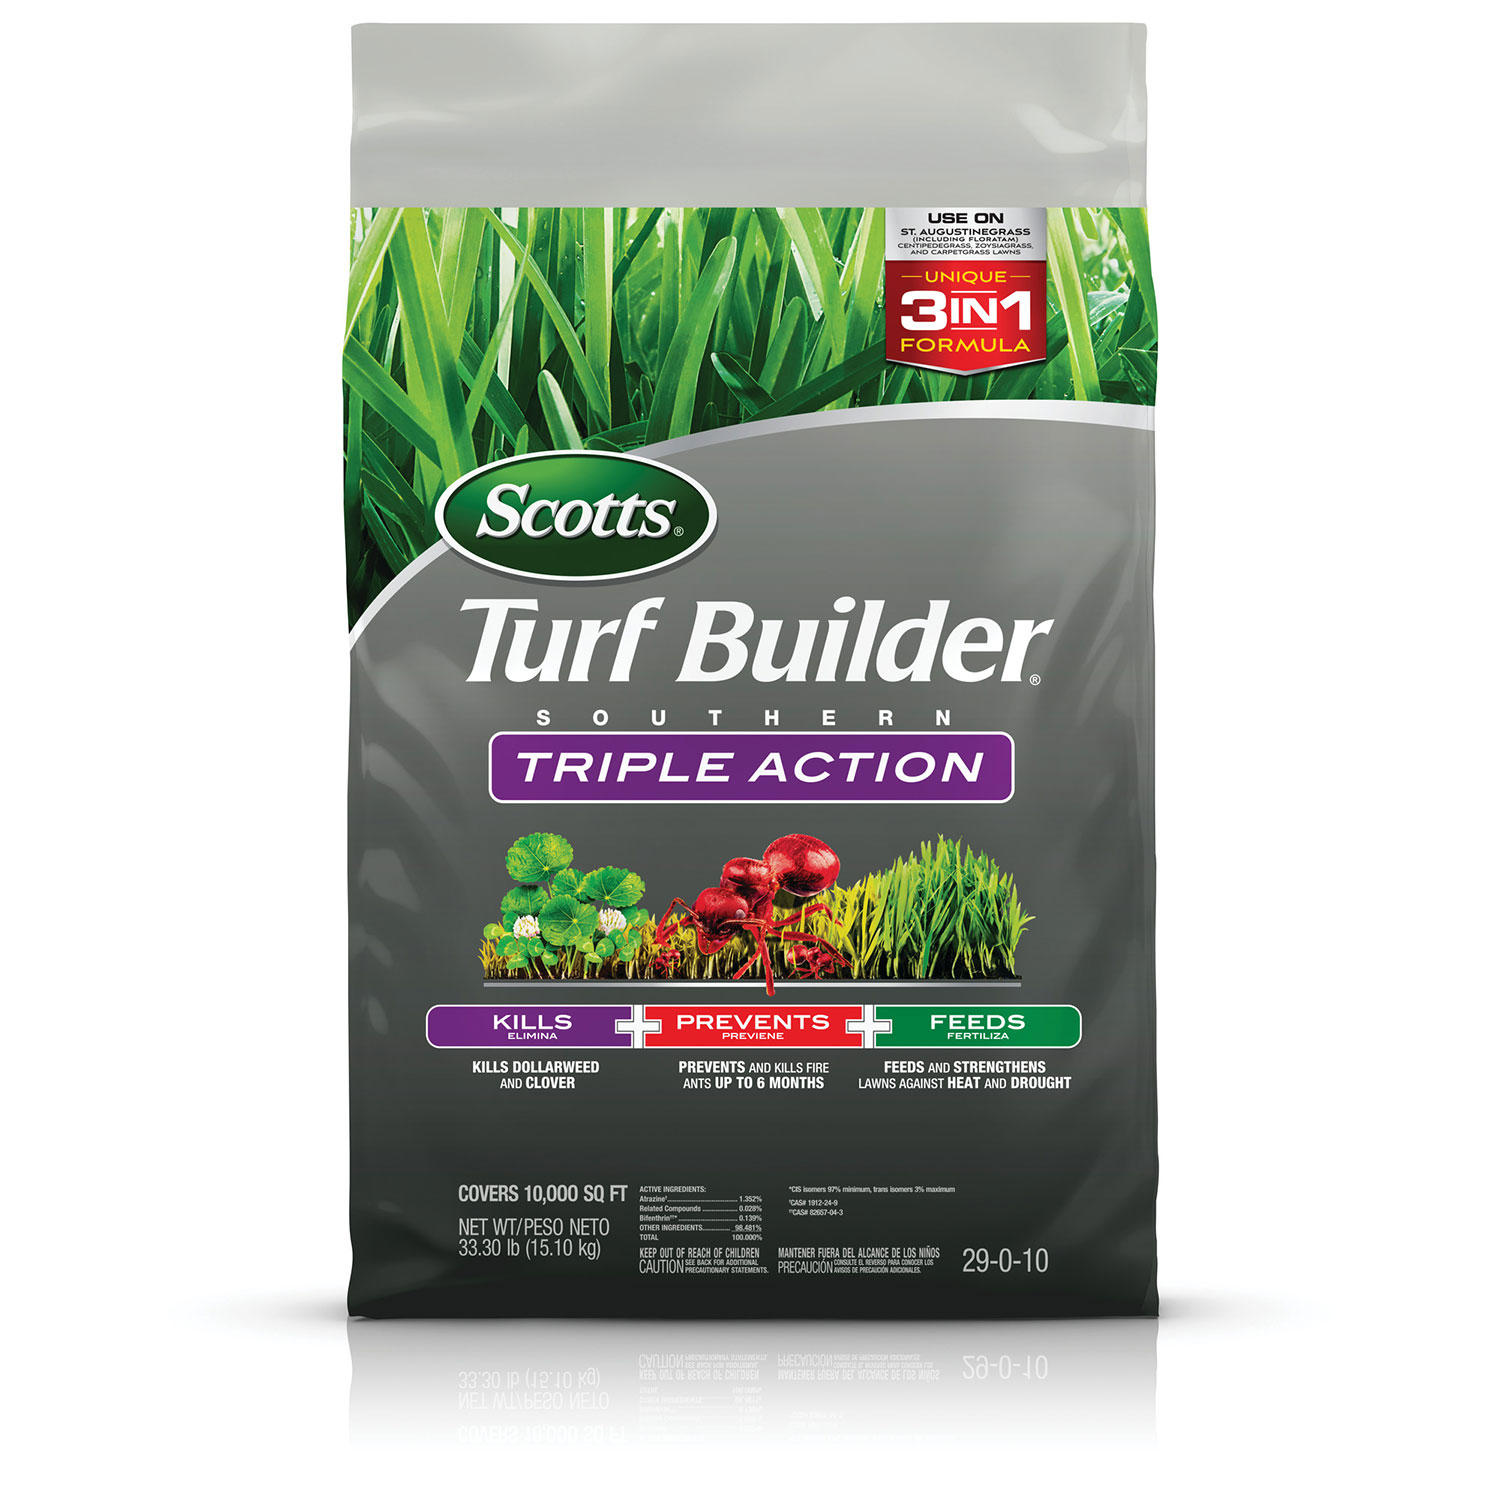 Scotts Turf Builder Southern Triple Action Fertilizer YMMV - $10